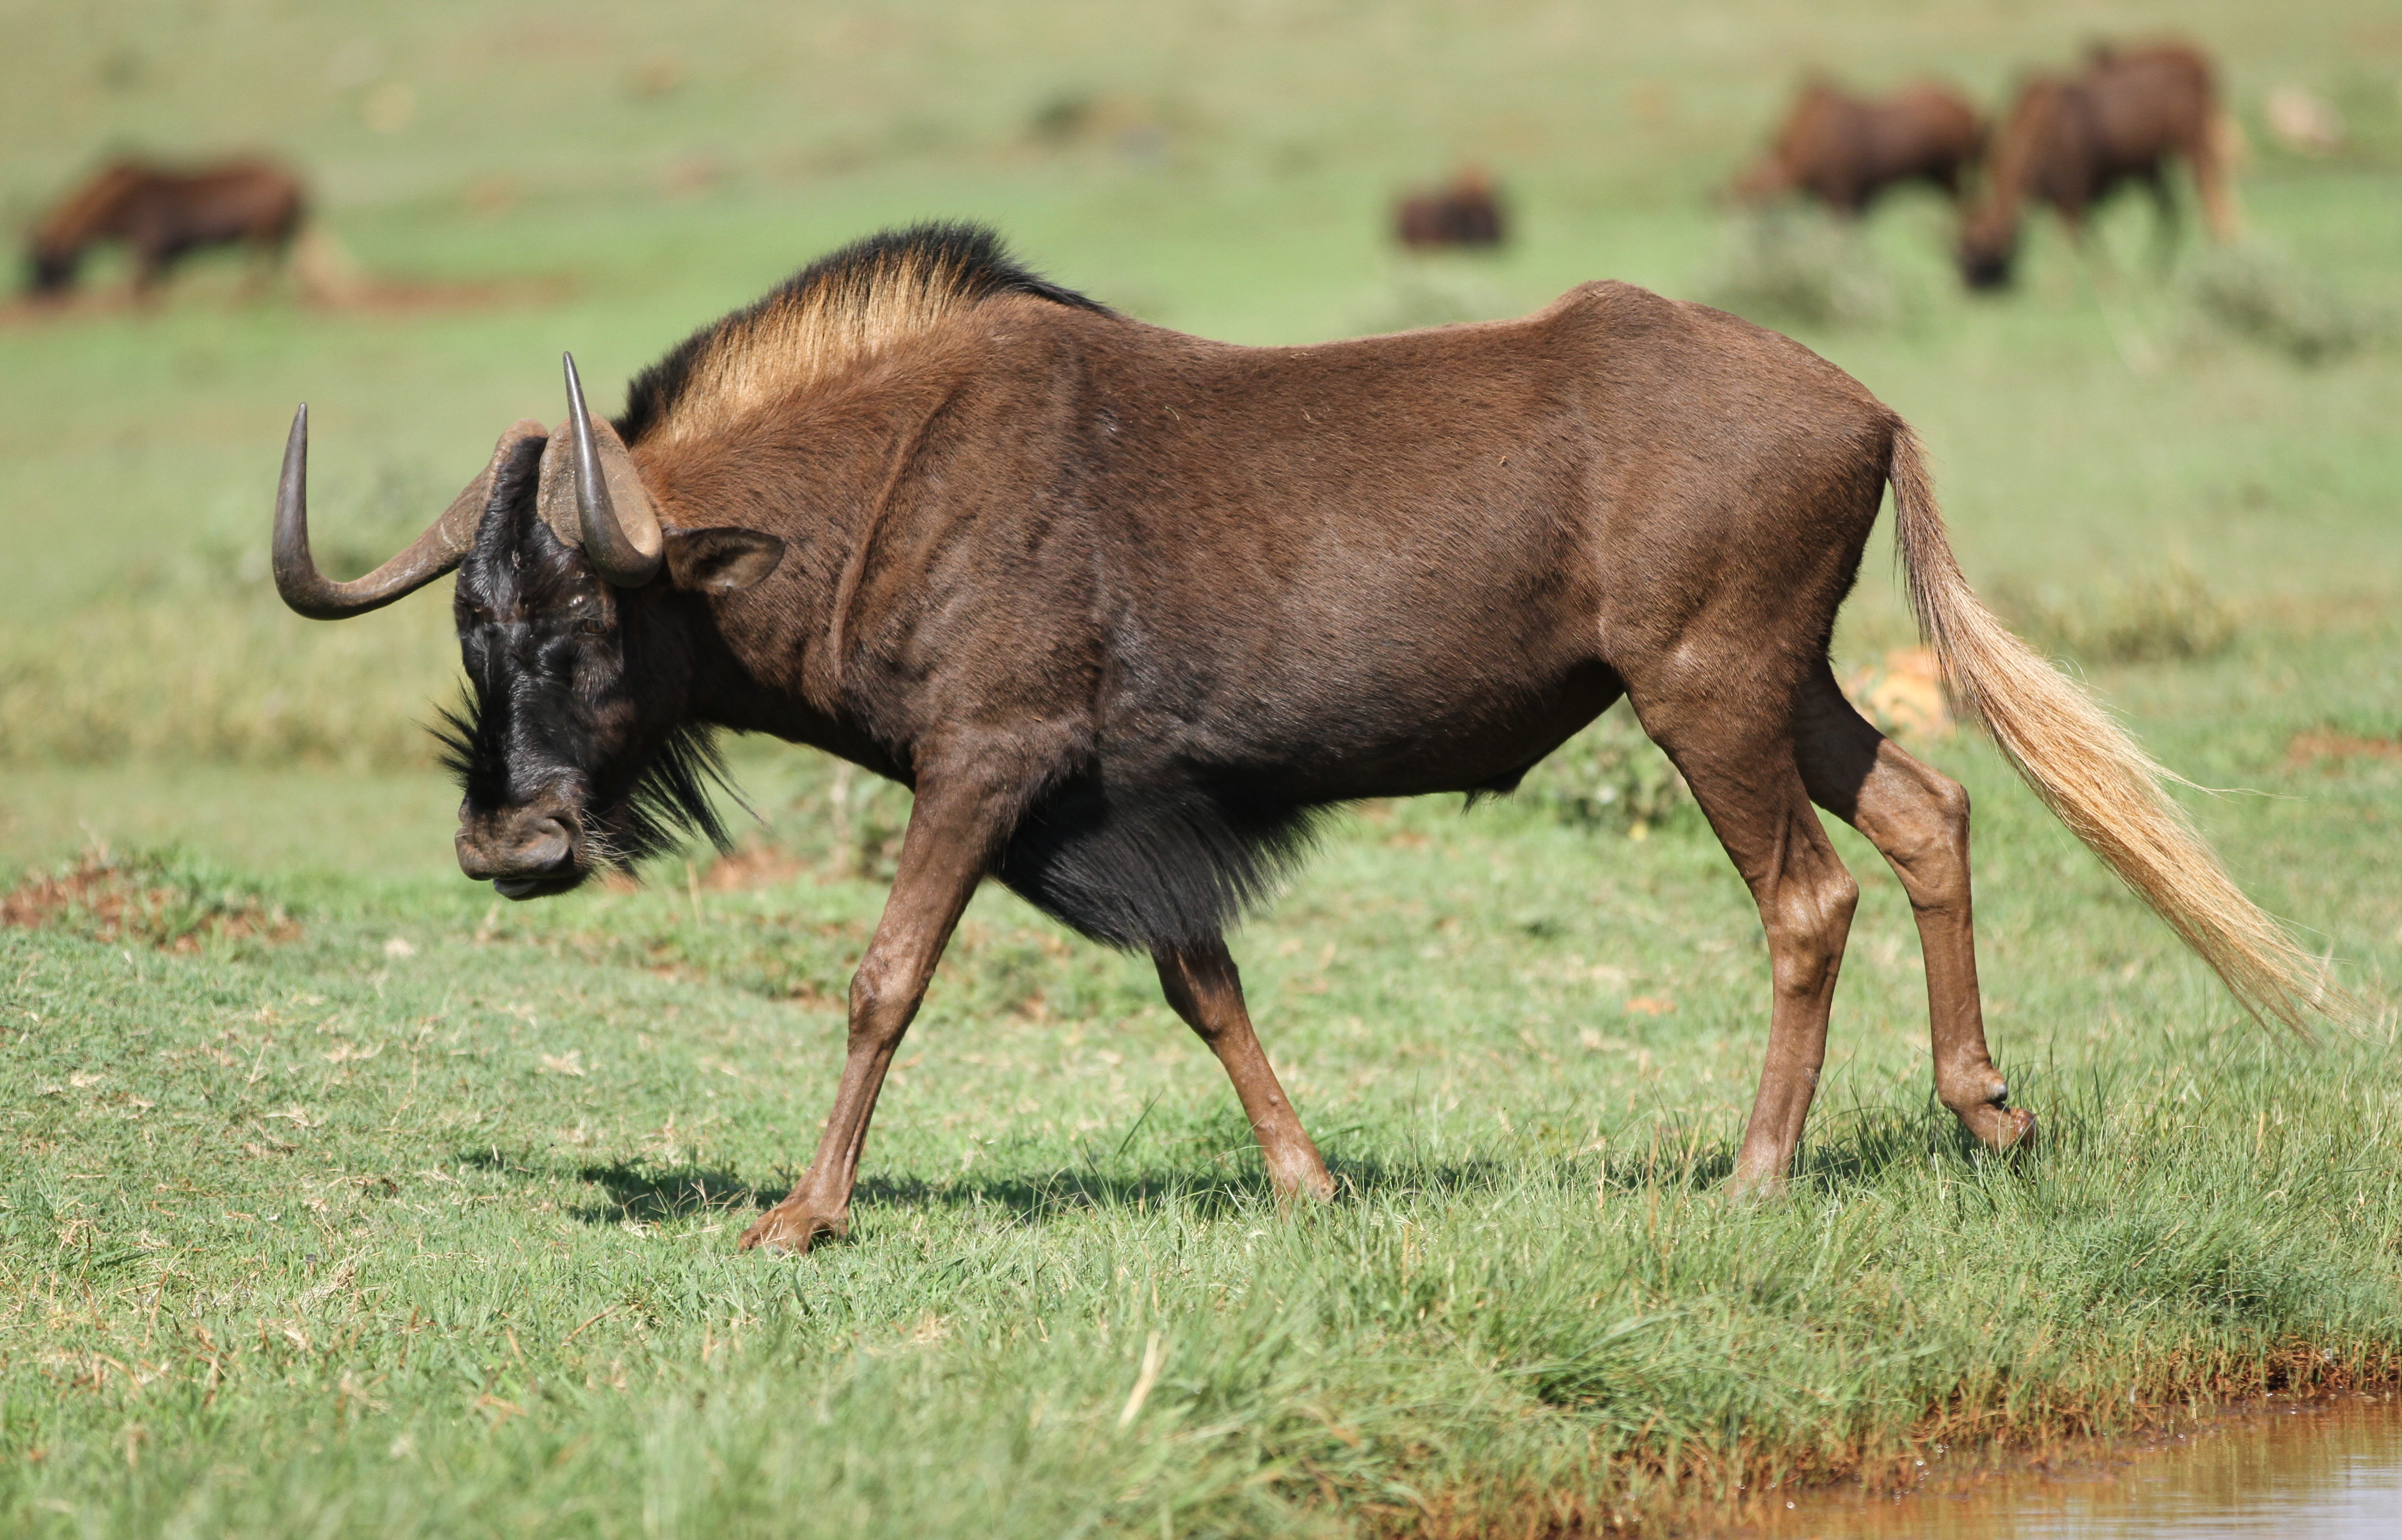 Wildebeest - Wikipedia